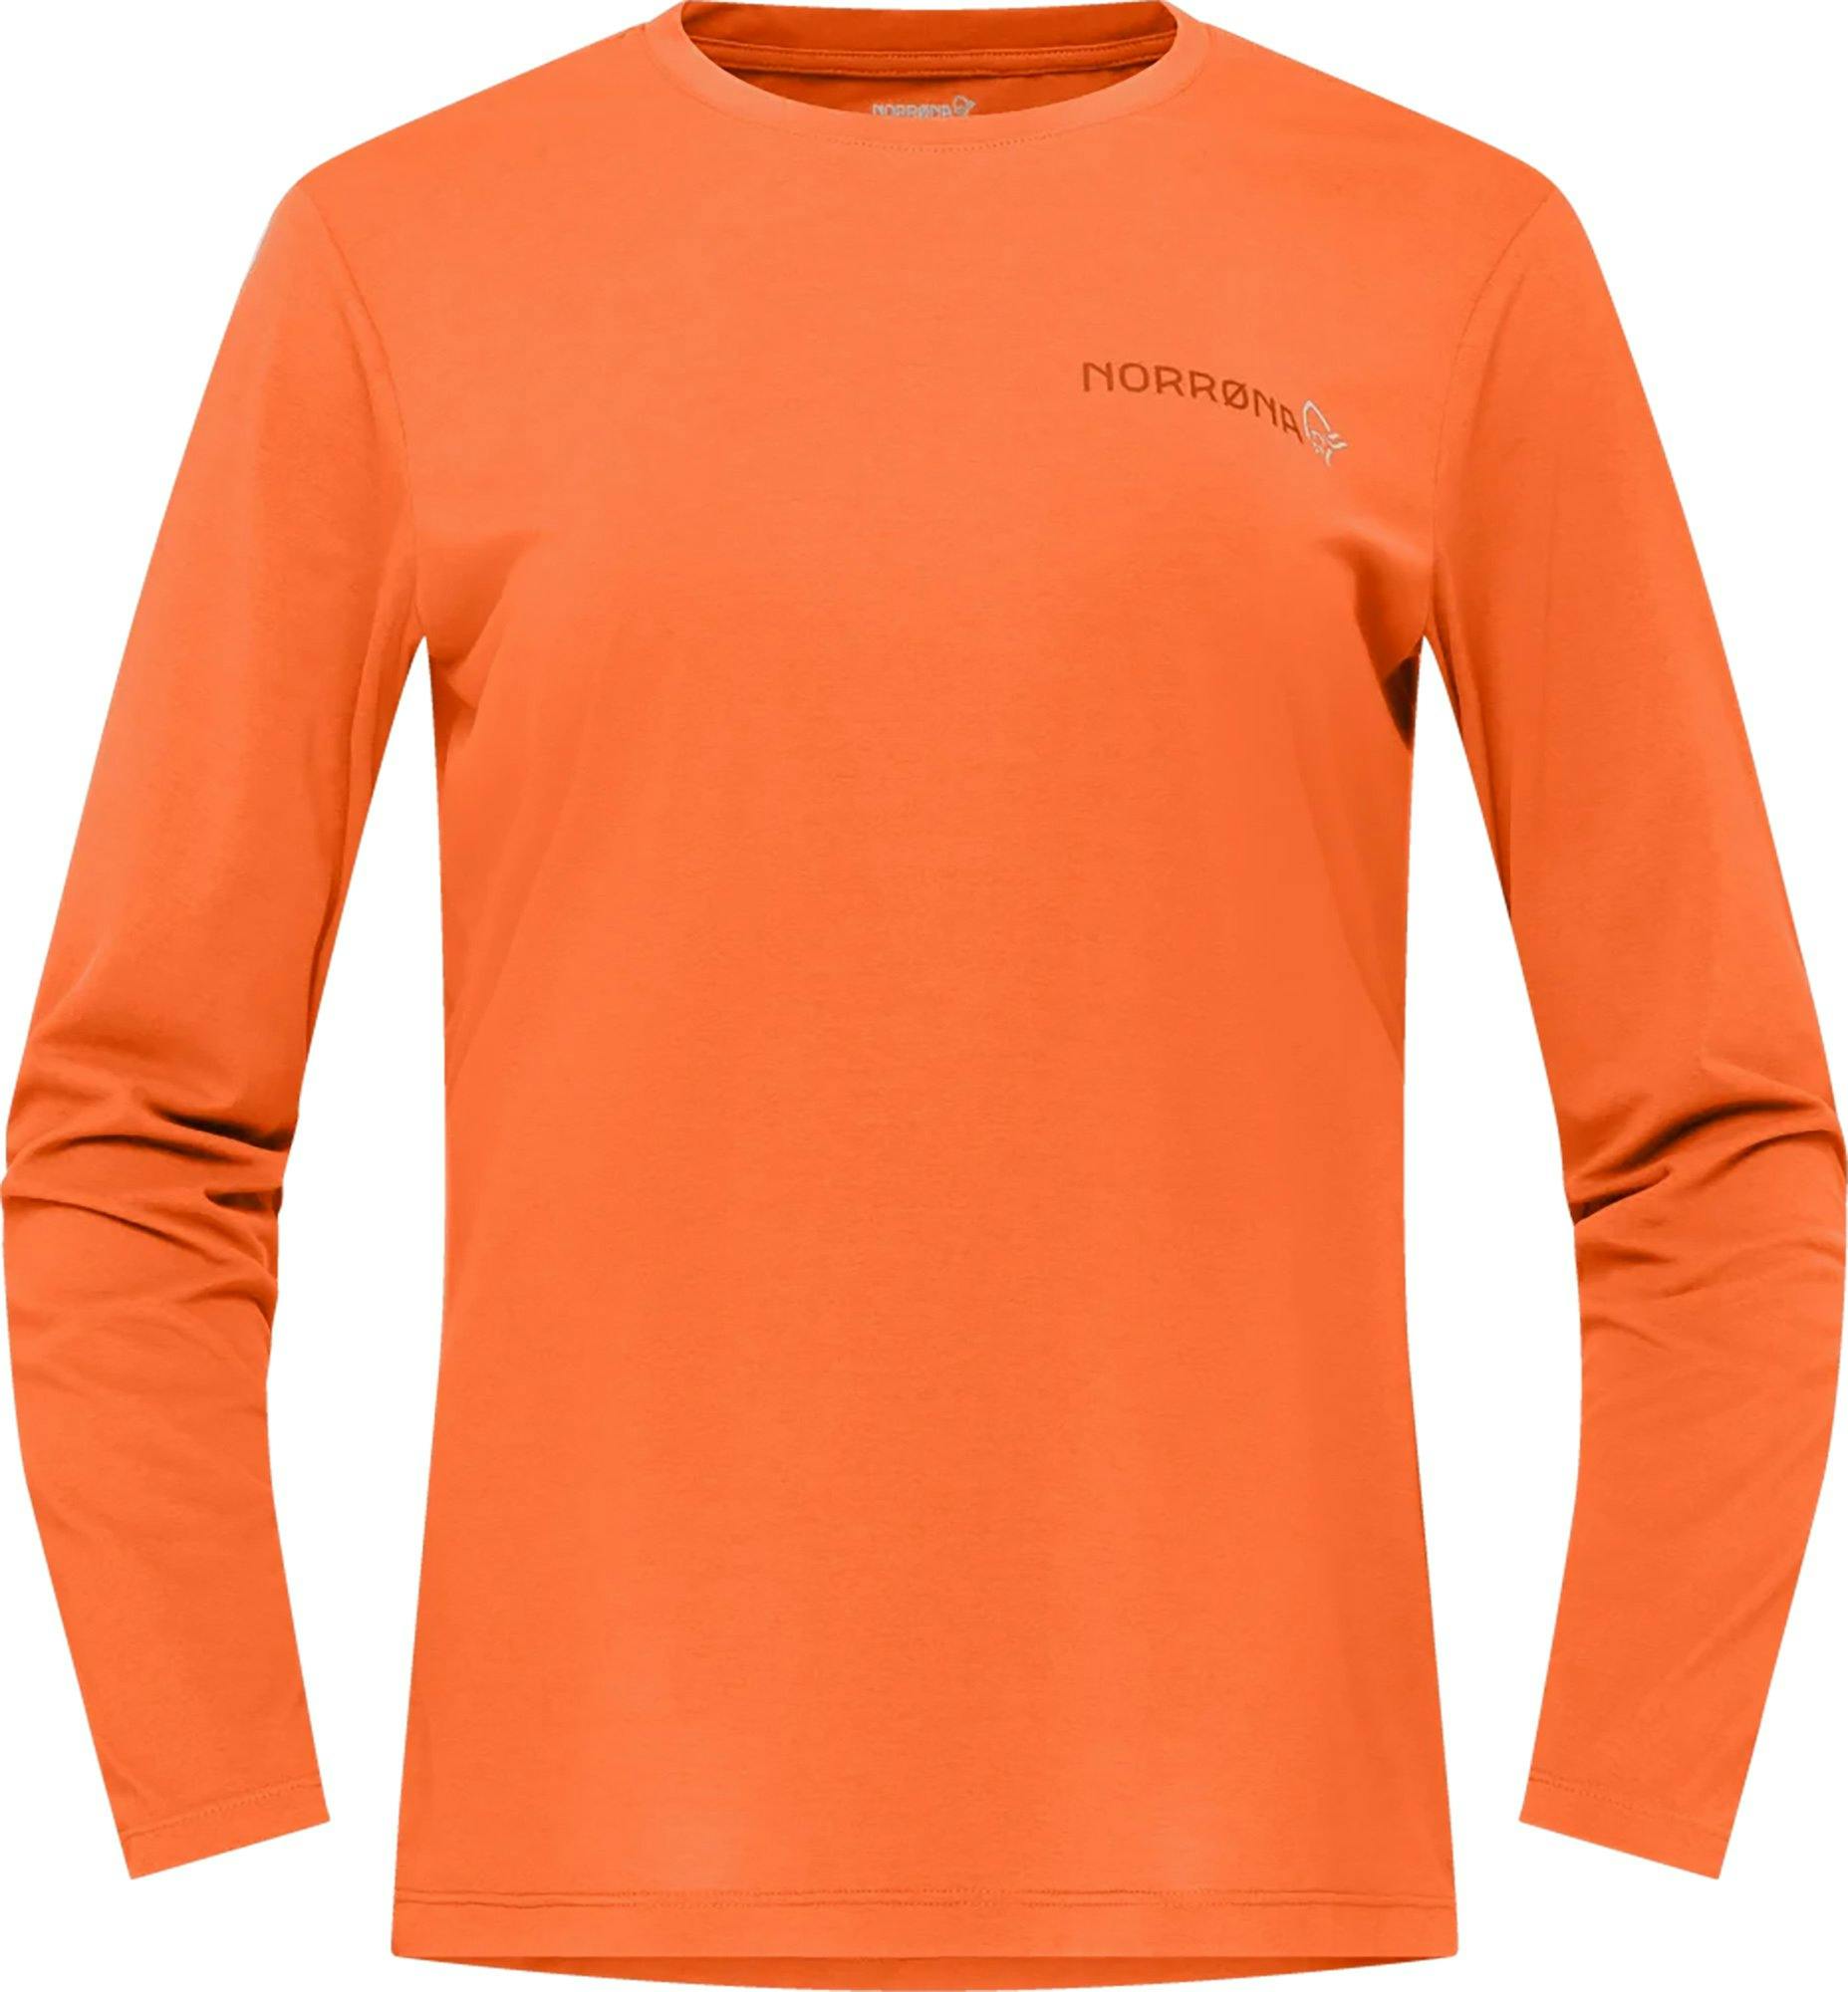 Product image for Femund Tech Long Sleeve T-Shirt - Women's